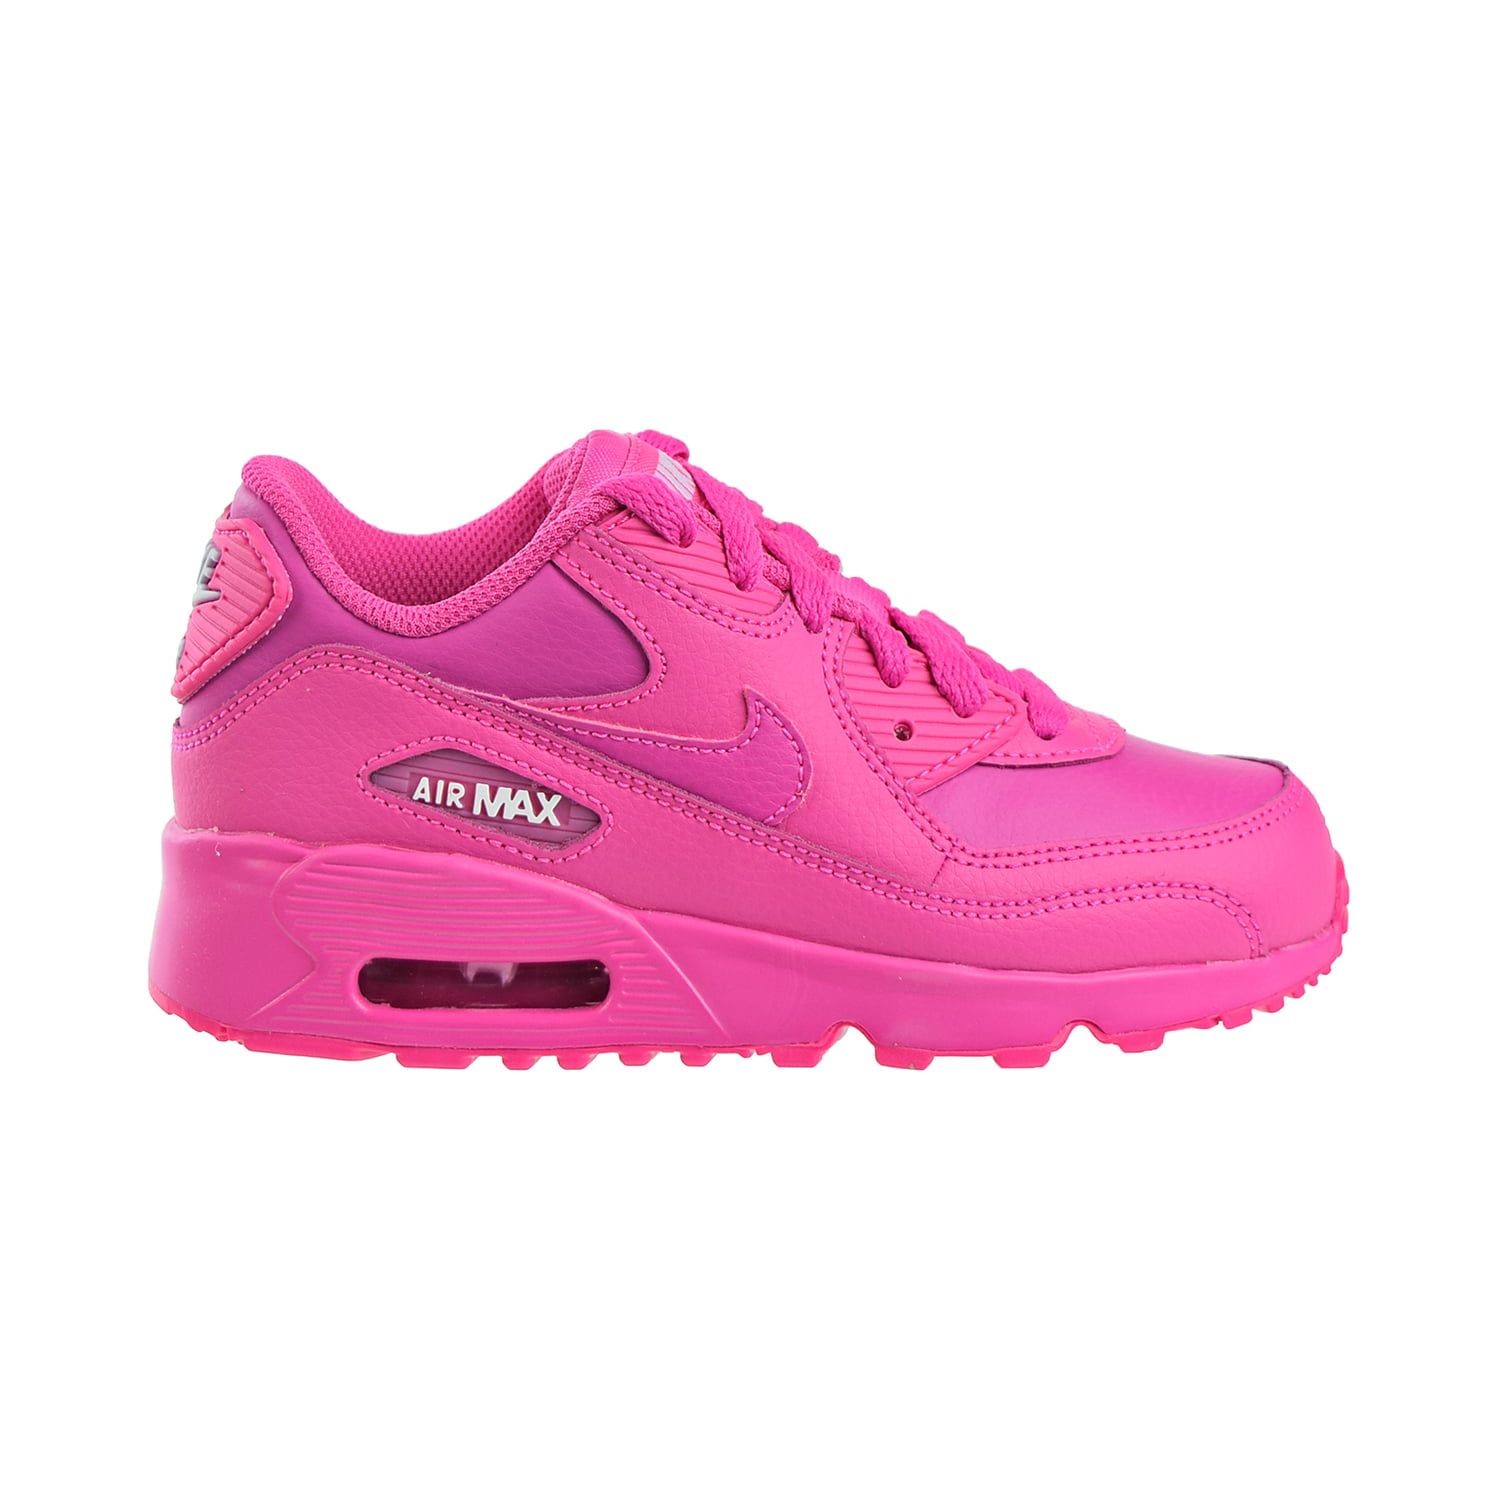 Nike Air Max 90 LTR (PS) Little Kids Shoes Laser Fuchsia 833377-603 ...